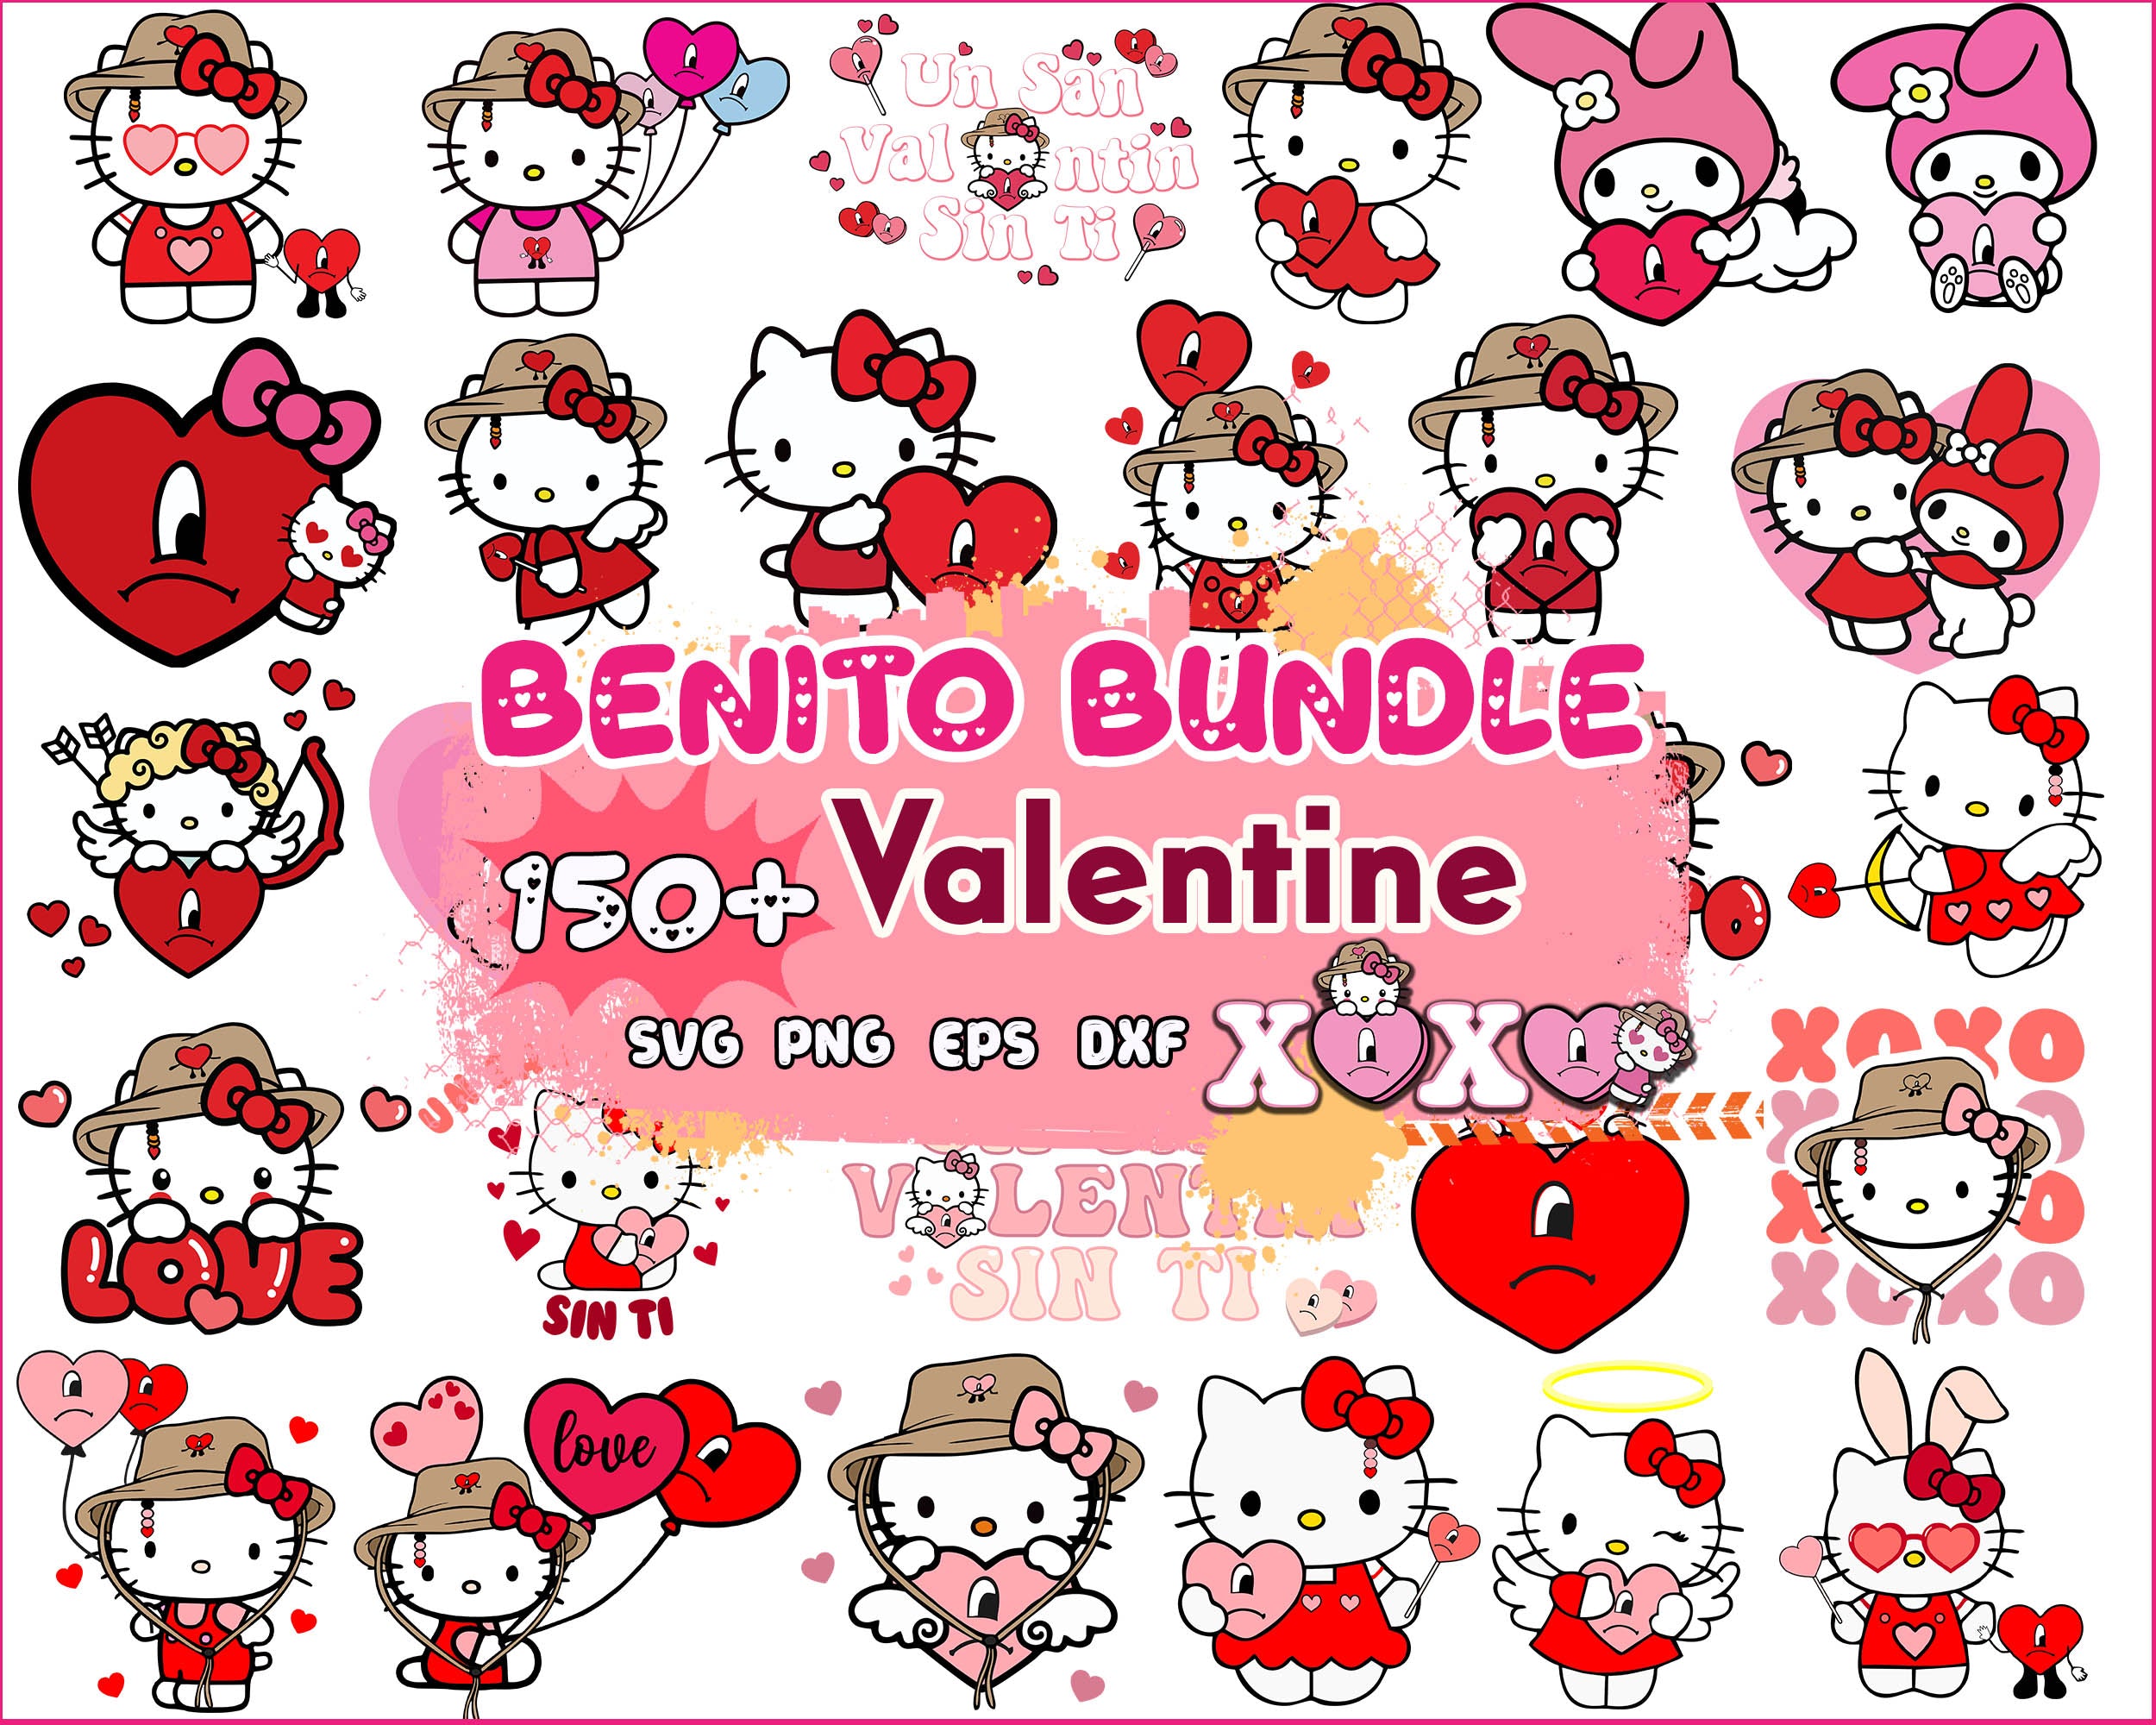 New 150+ Valentine Hello Kitty Bundle, Valentine kawaii kitty SVG png eps dxf, Cut File, Digital Download